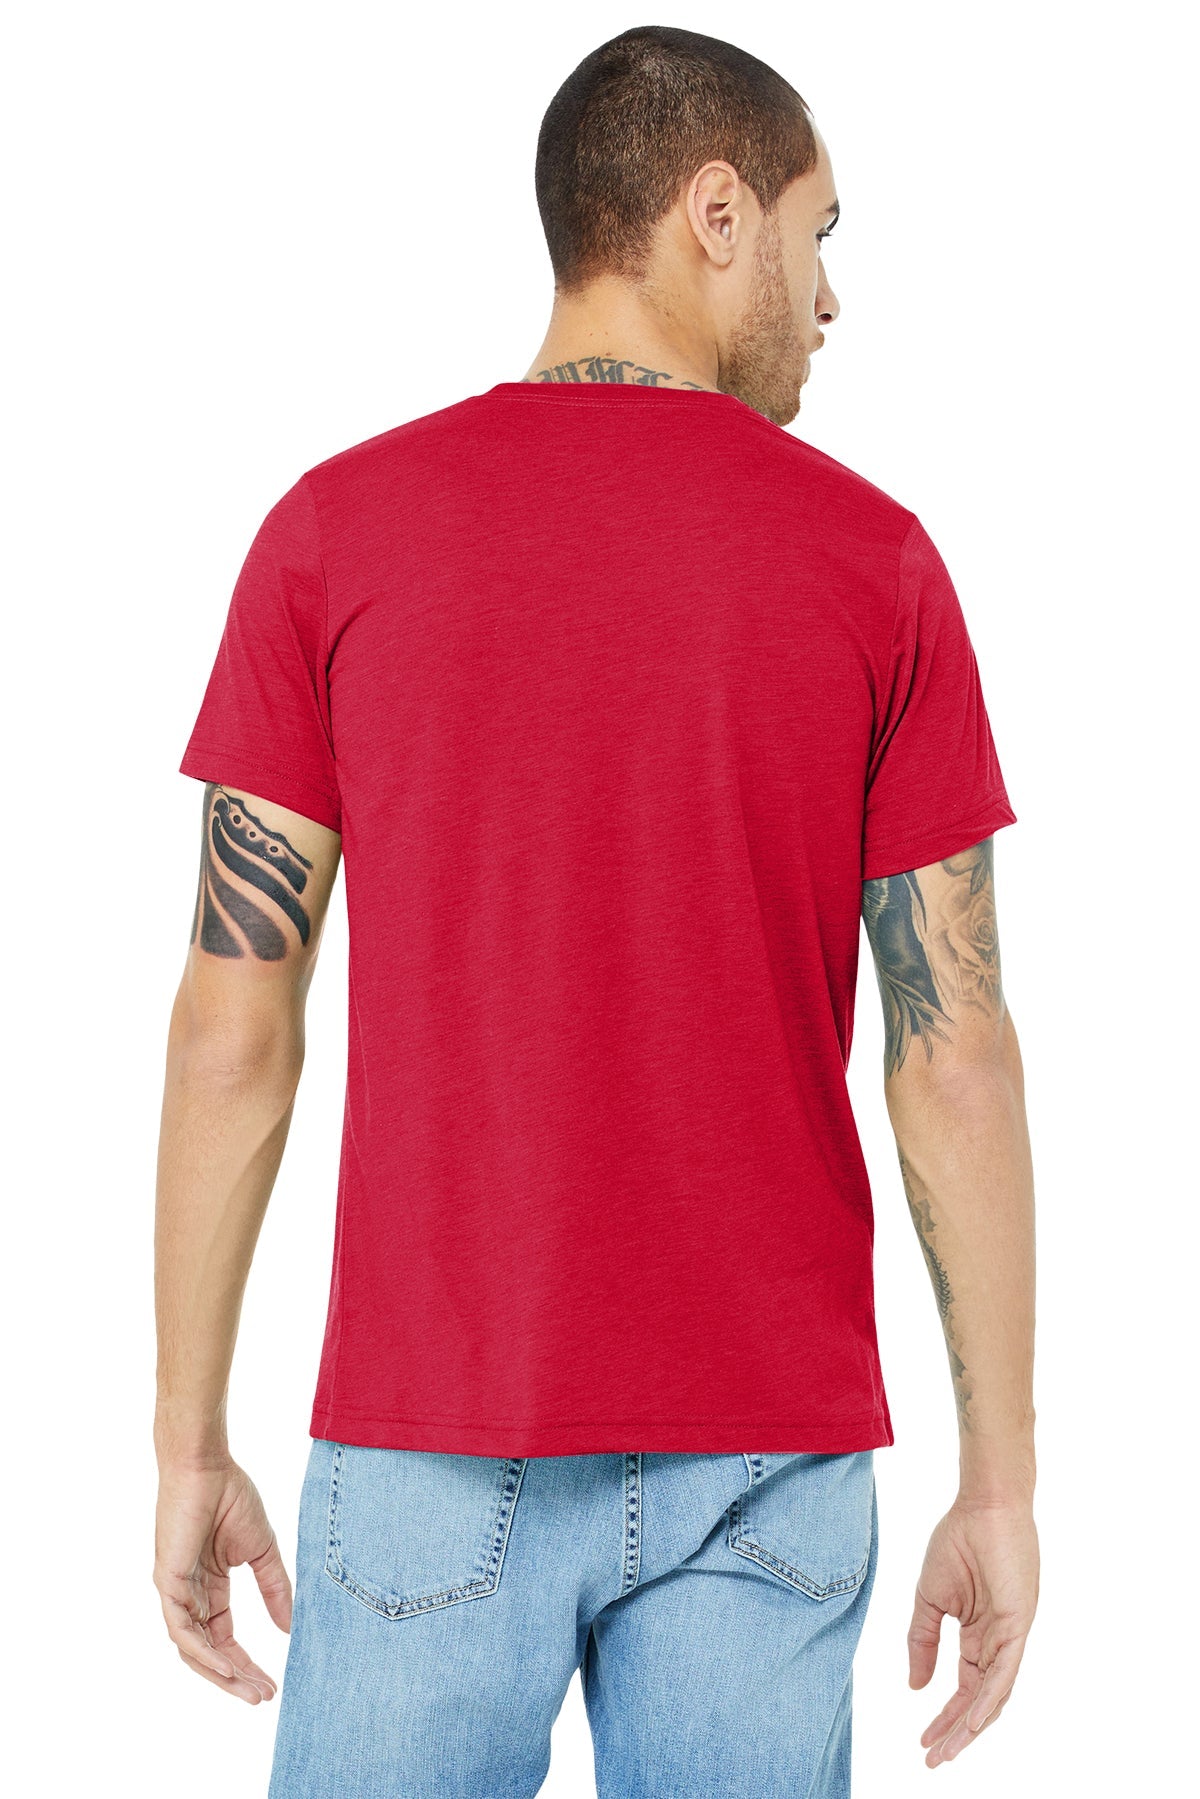 bella + canvas unisex triblend short sleeve t-shirt 3413c solid red tribln